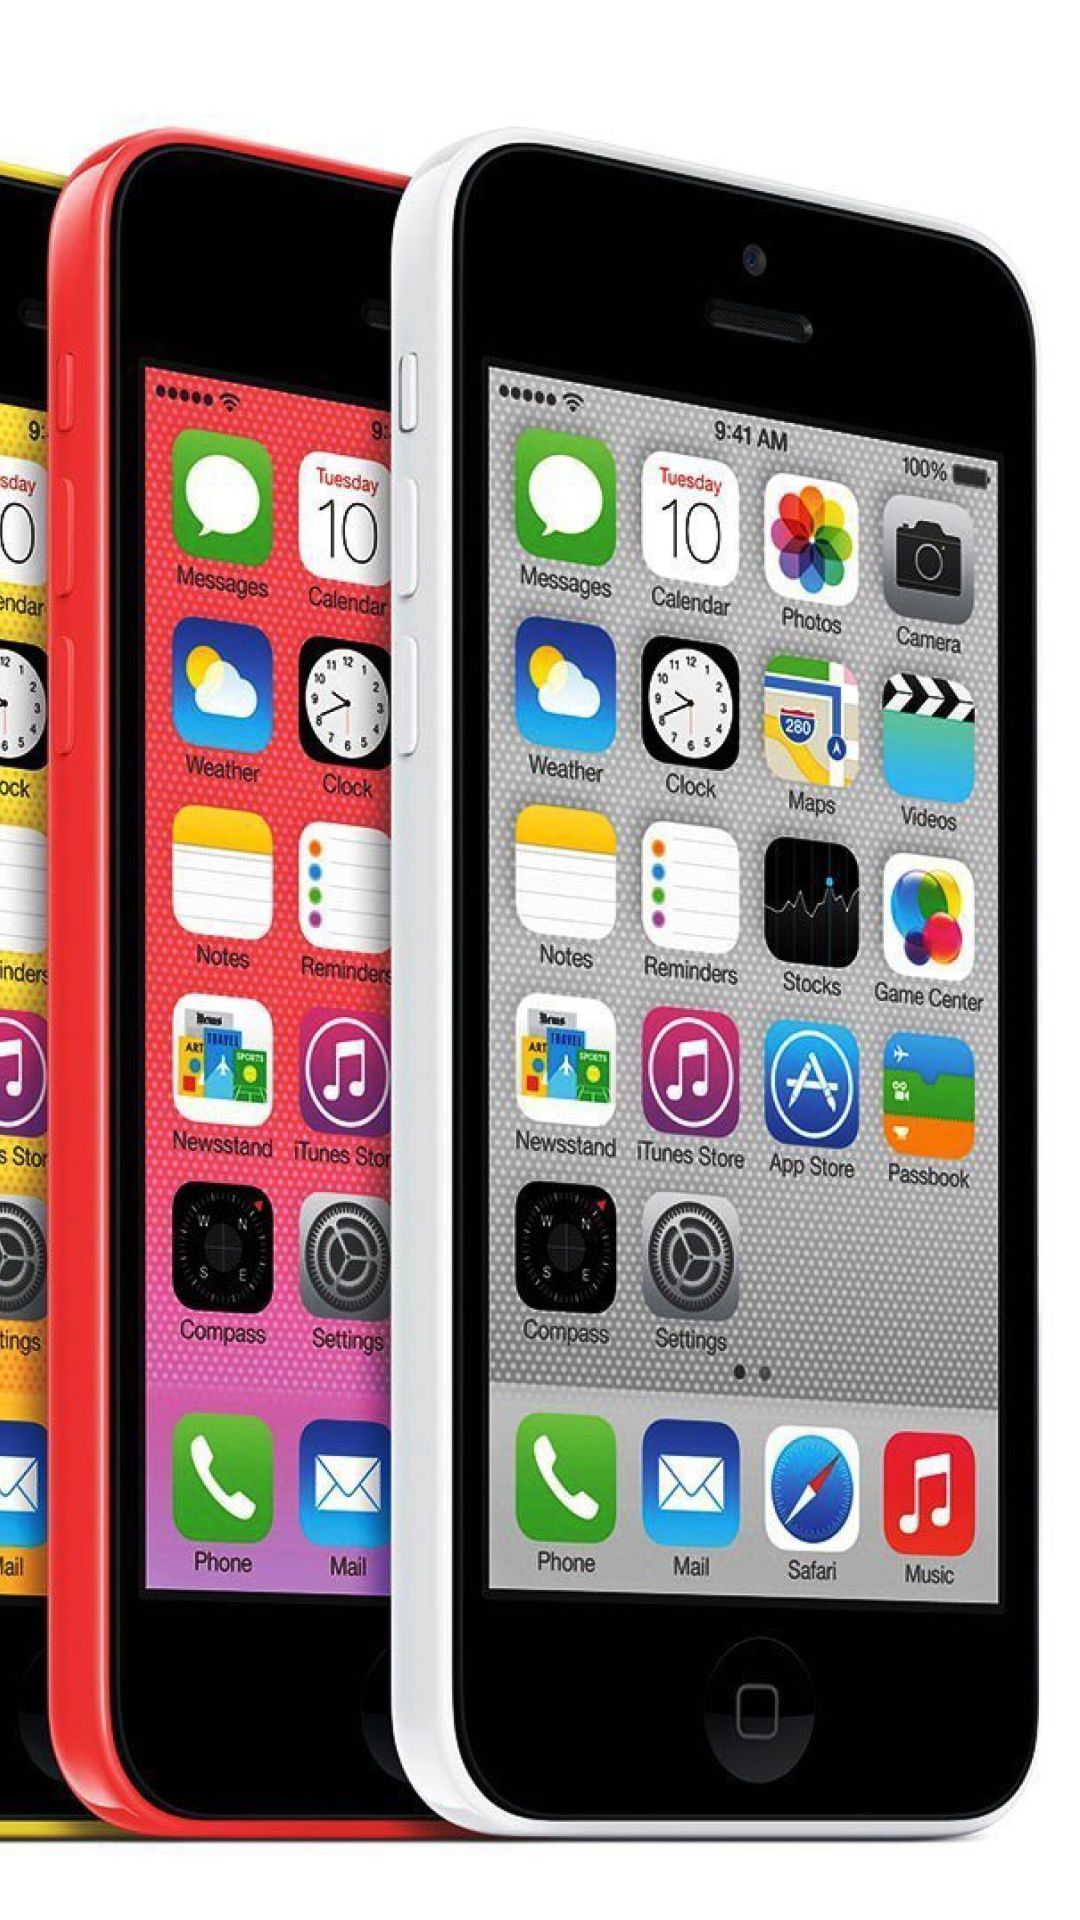 Apple iPhone 5c iOS 7 wallpaper 1080x1920